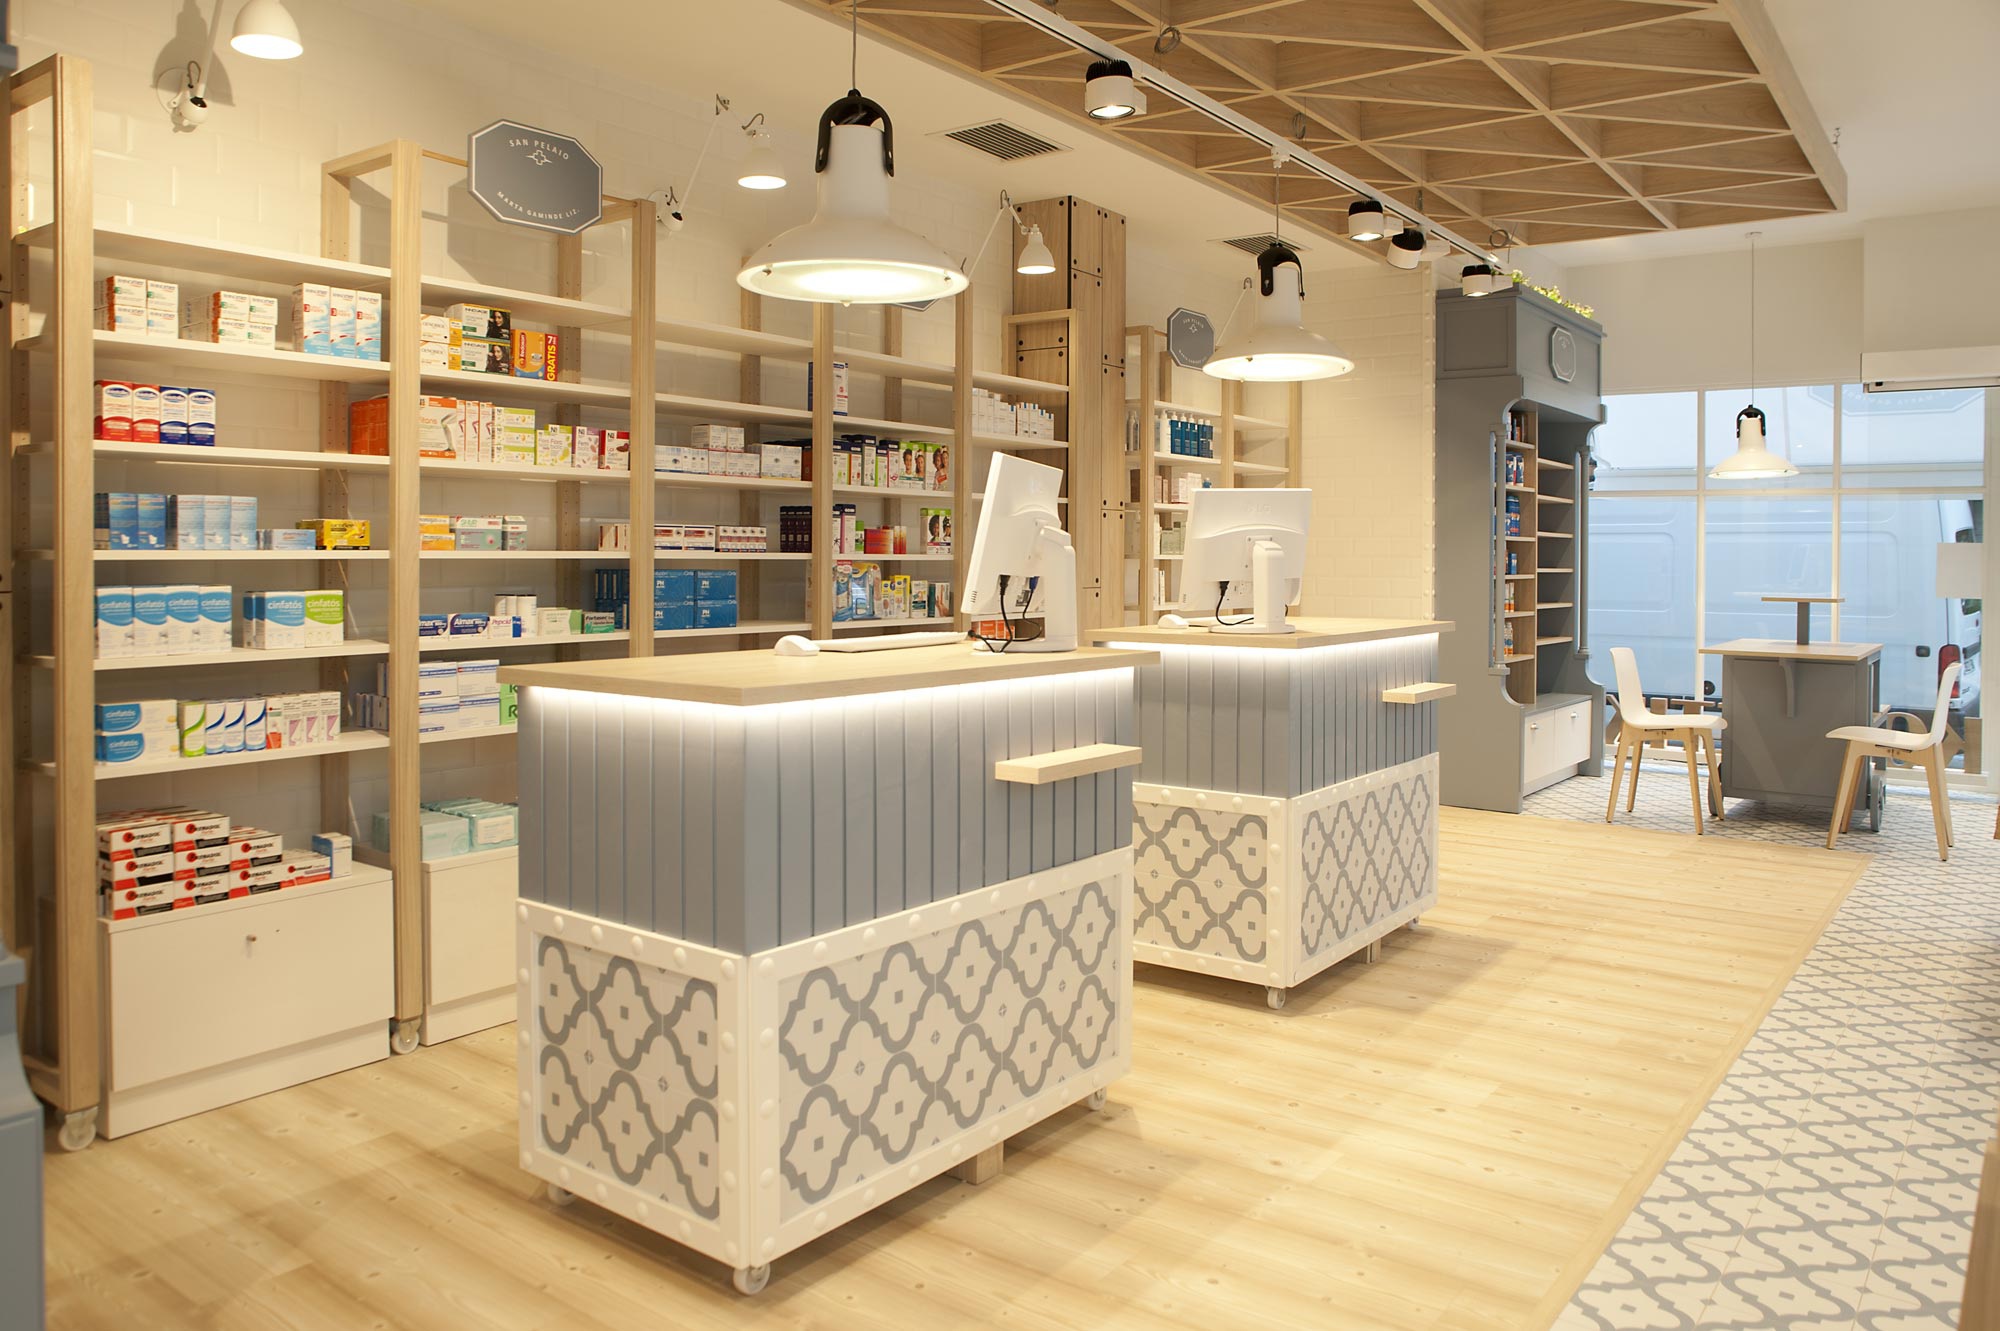 Lottus Wood Enea Design Farmacia San Pelaio Sube Interiorismo